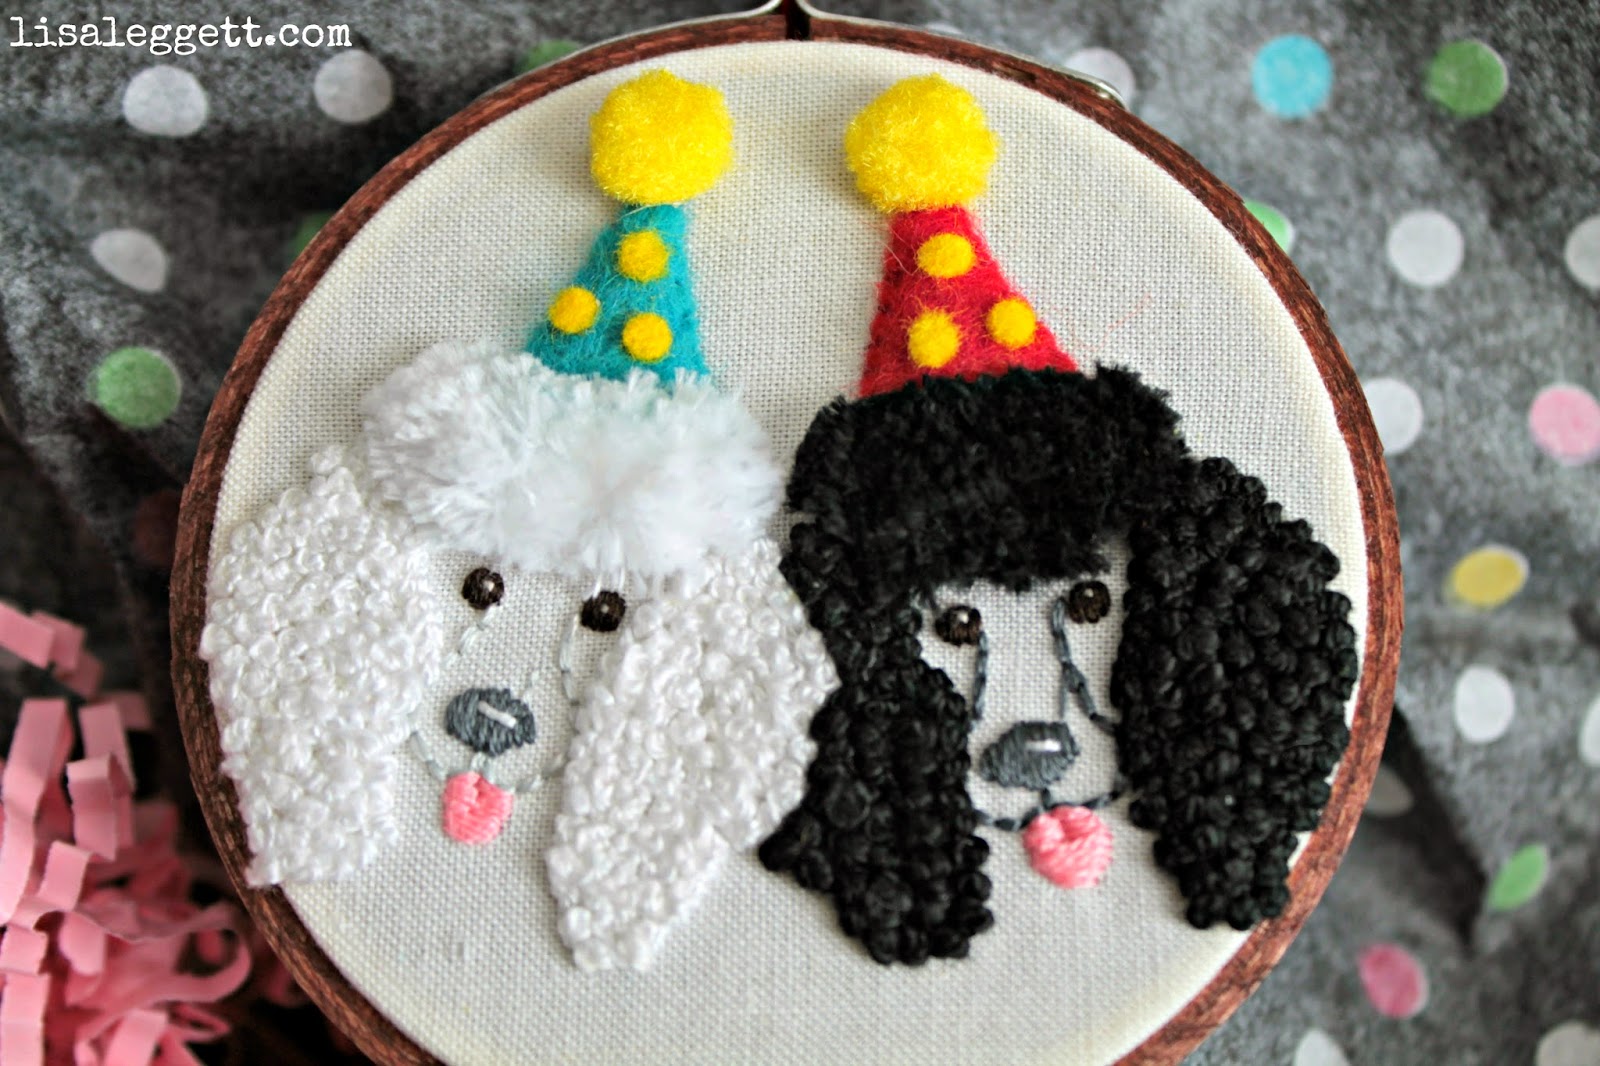 Party Poodles by Lisa Leggett